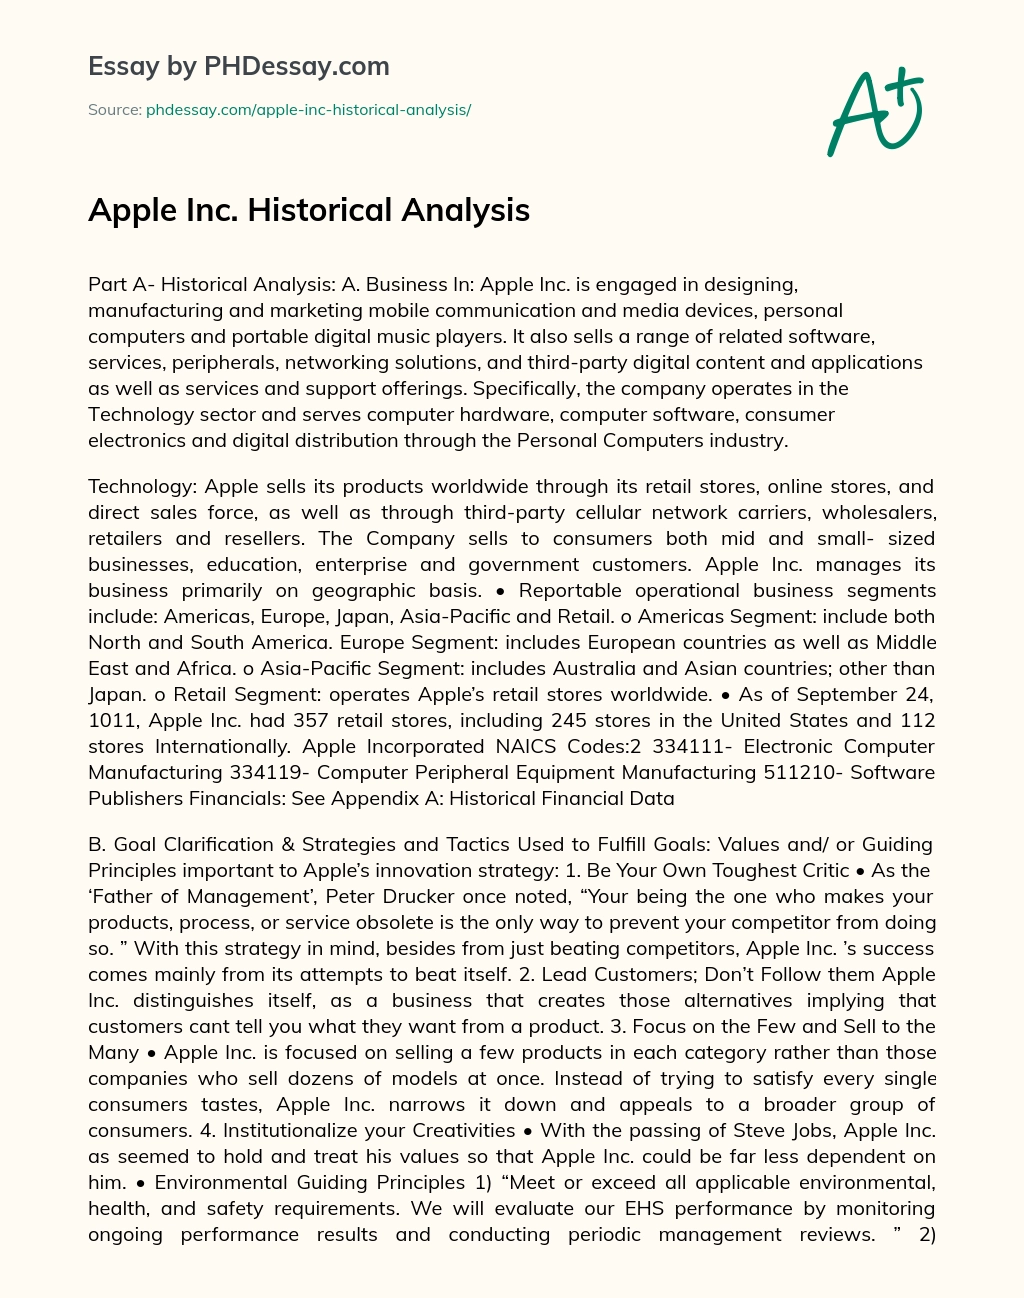 Apple Inc. Historical Analysis essay